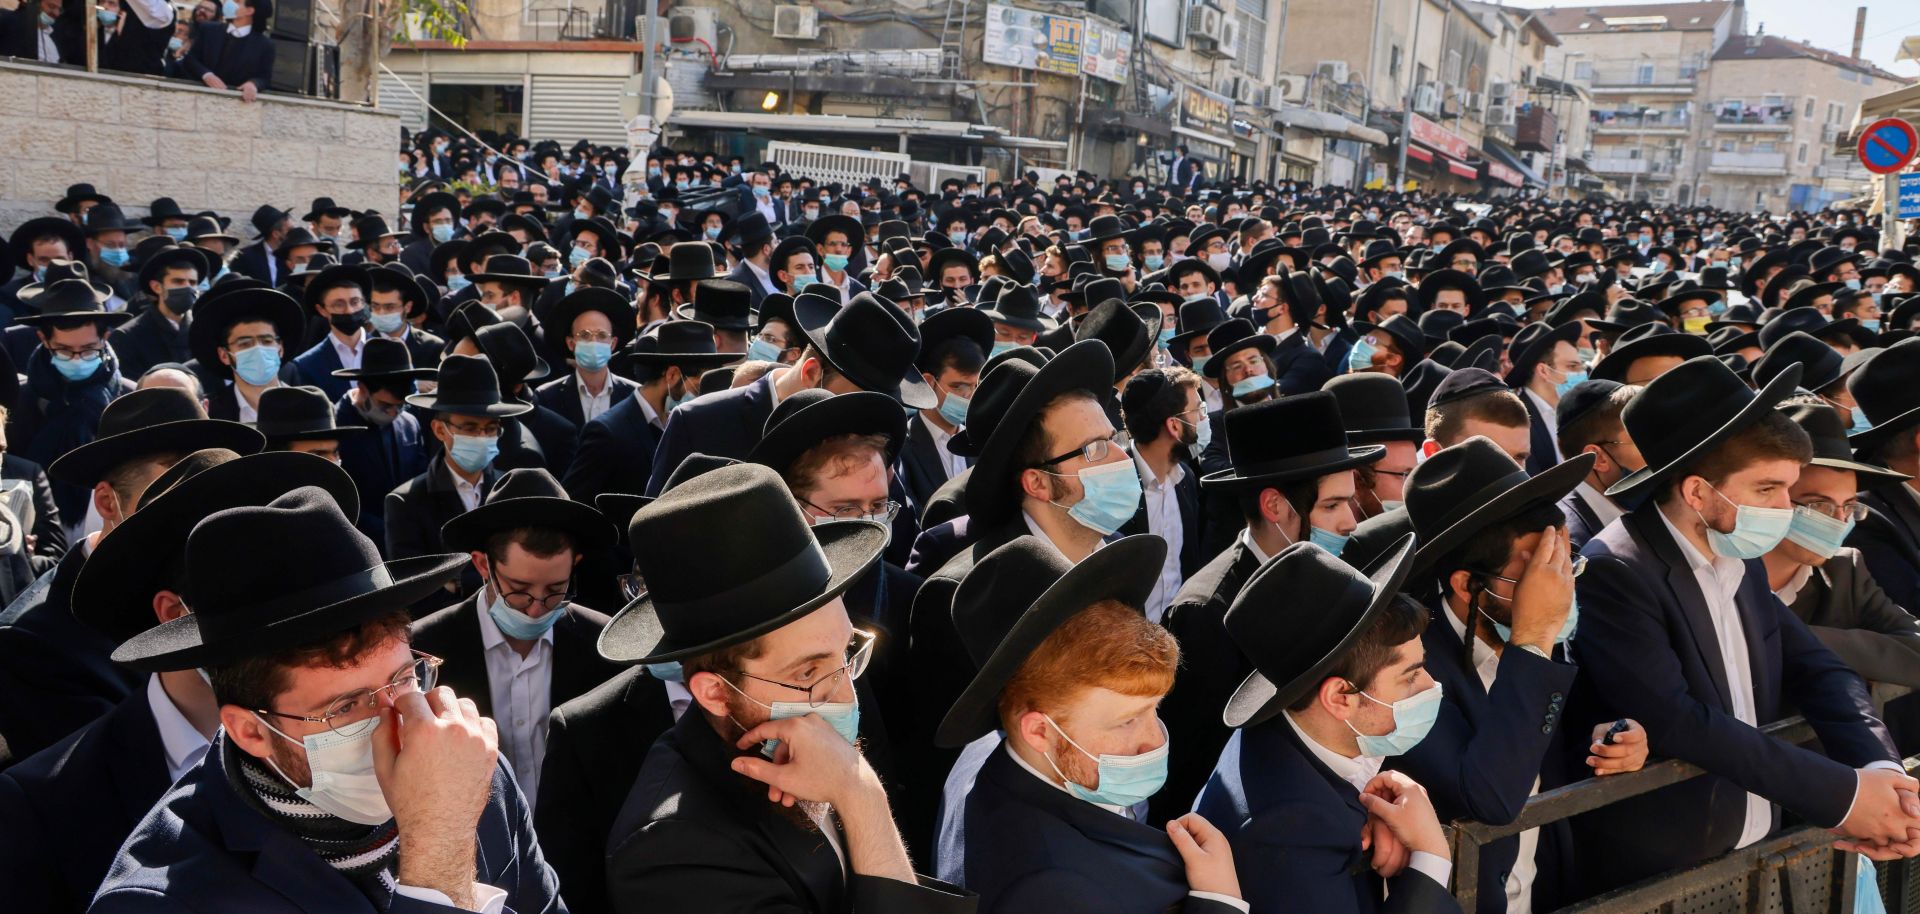 Ultra-Orthodox Jewish men attend the funeral of Rabbi Aharon David Hadash, the spiritual leader of the Mir Yeshiva, in Jerusalem's ultra-Orthodox neighborhood of Beit Yisrael on Dec. 3, 2020.